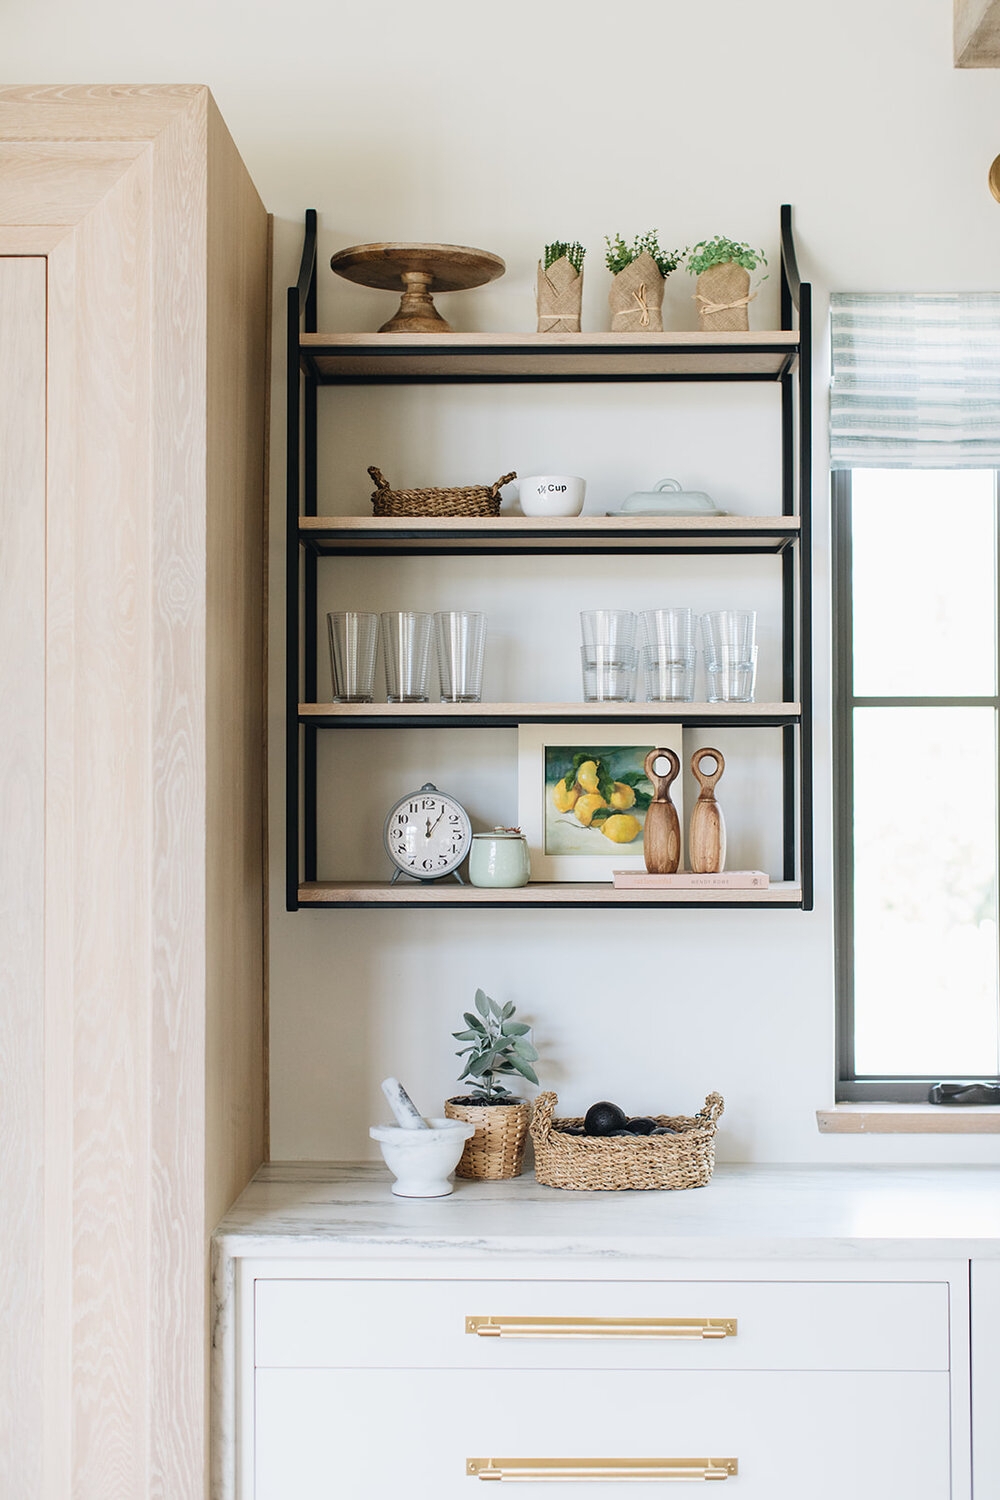 30 Open Shelving Kitchen Ideas: Tidy, Functional & Stylish - Foter